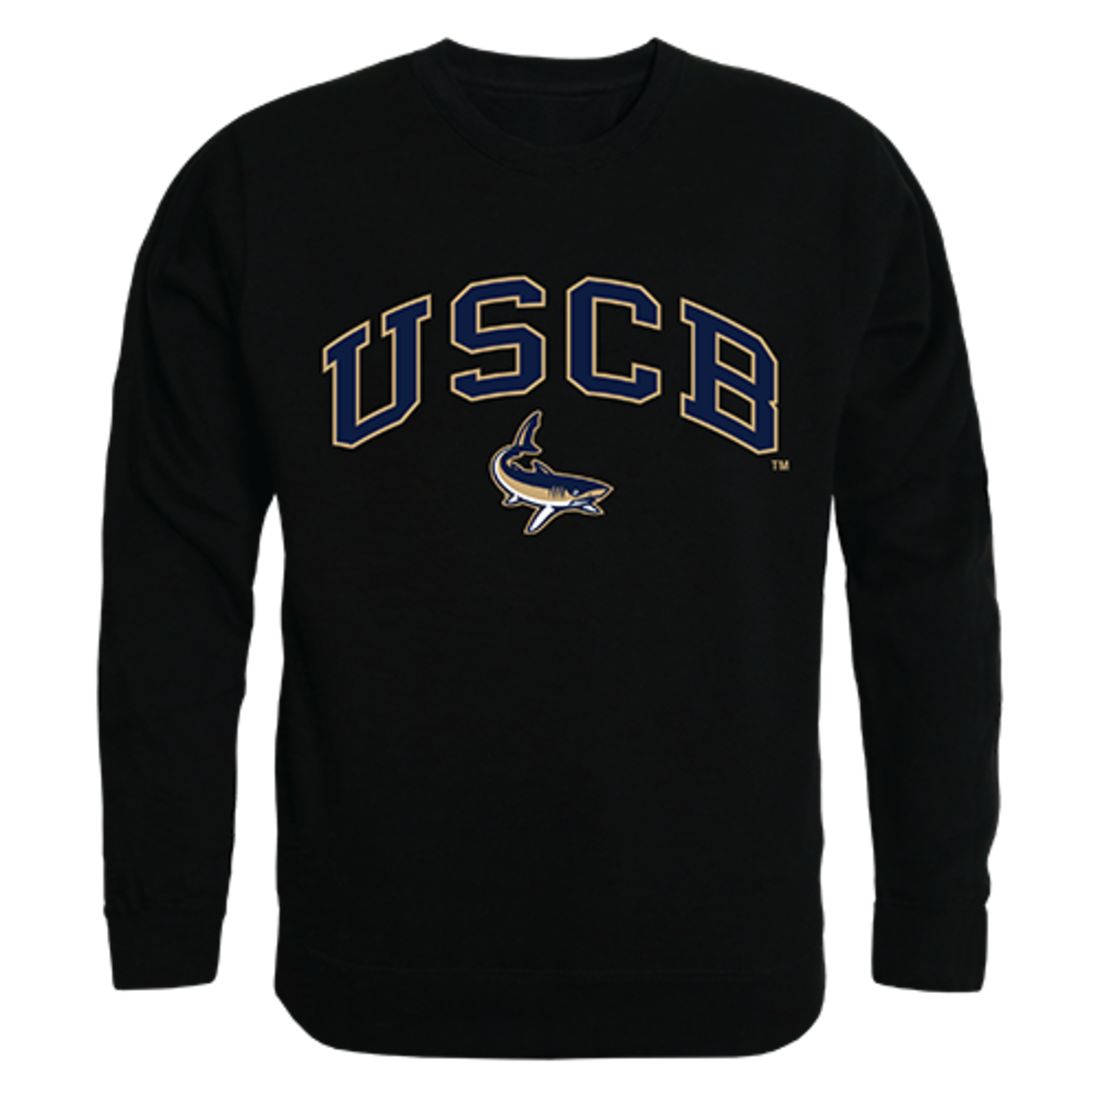 USCB University of South Carolina Beaufort Campus Crewneck Pullover Sweatshirt Sweater Black-Campus-Wardrobe